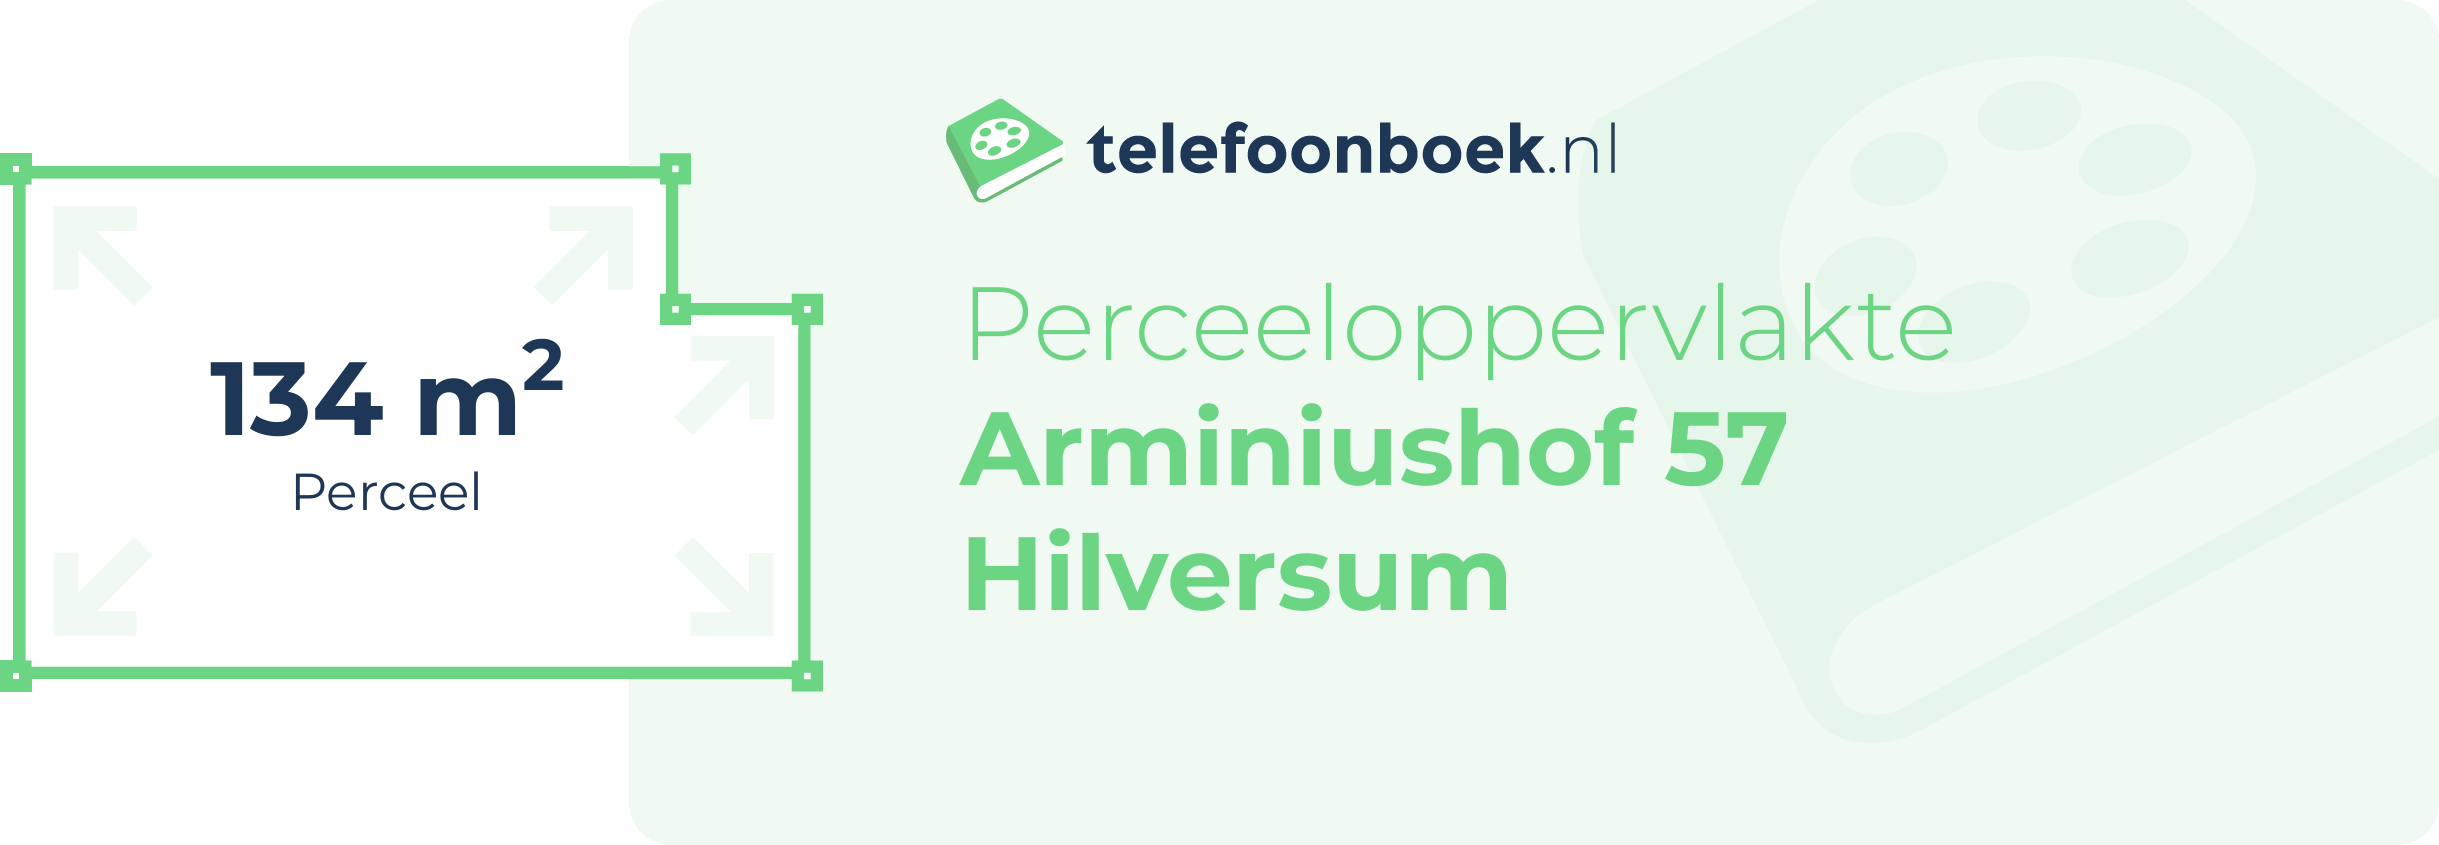 Perceeloppervlakte Arminiushof 57 Hilversum